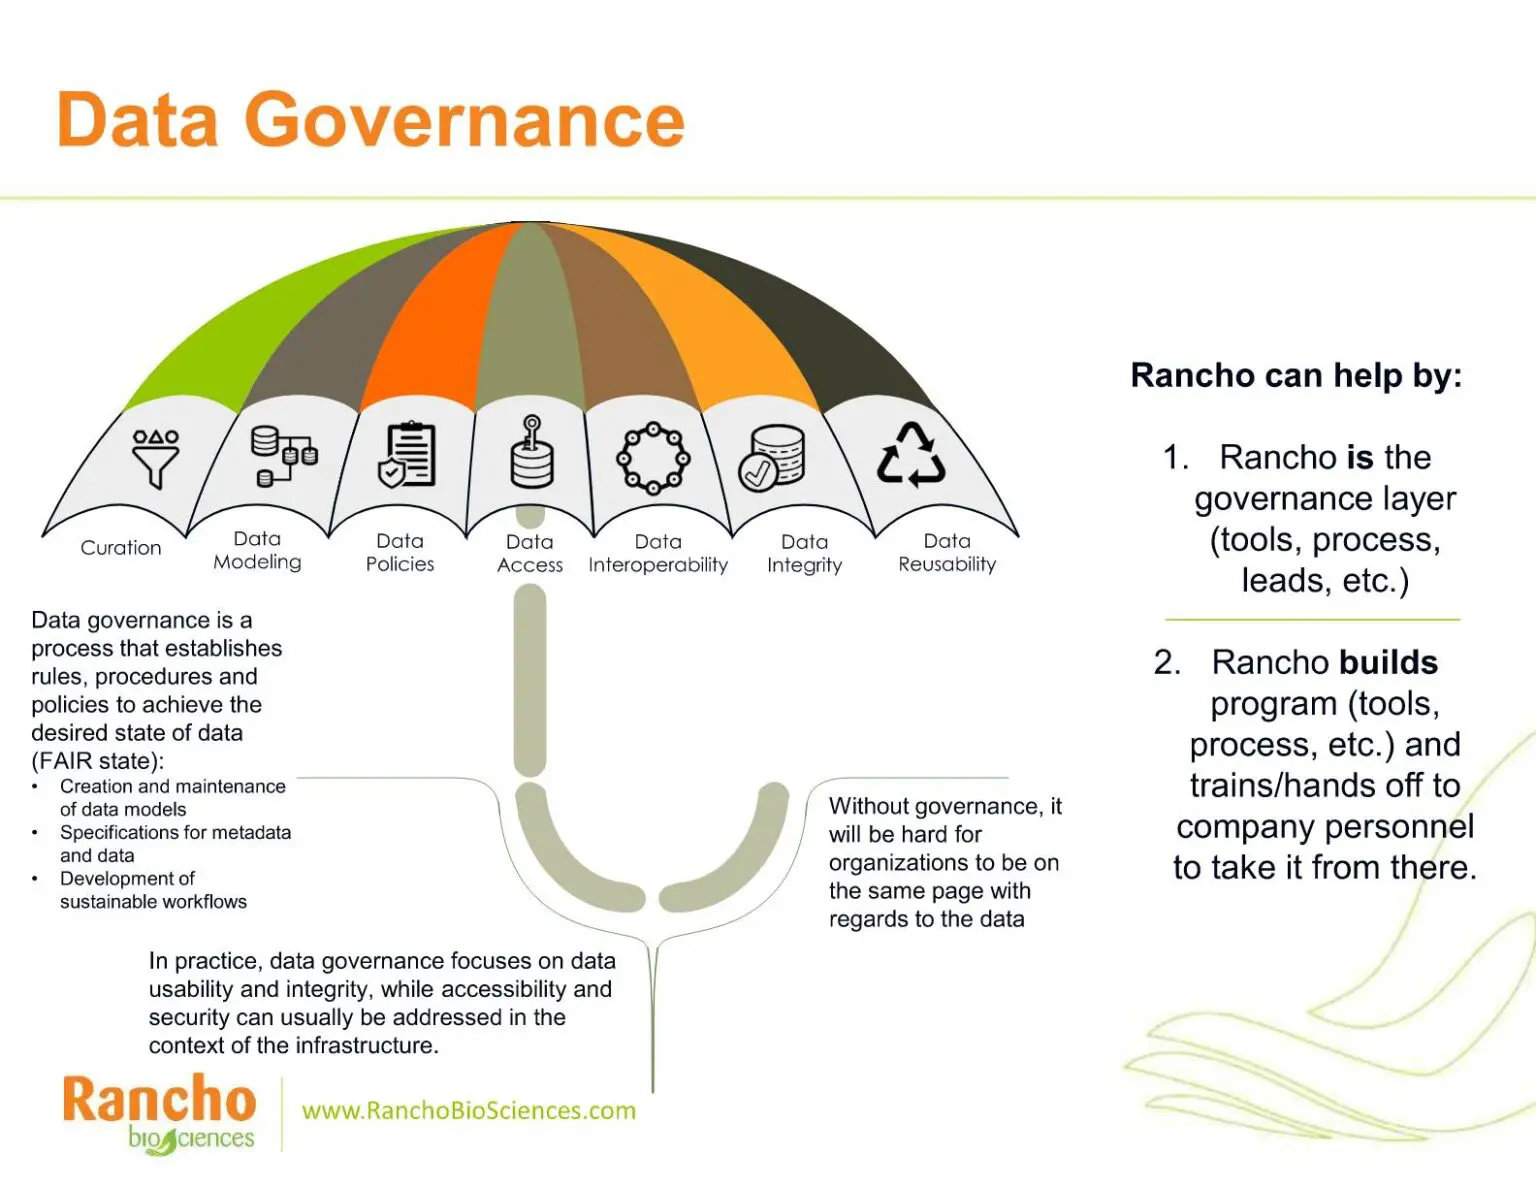 Data-Governance-pdf-1536x1187